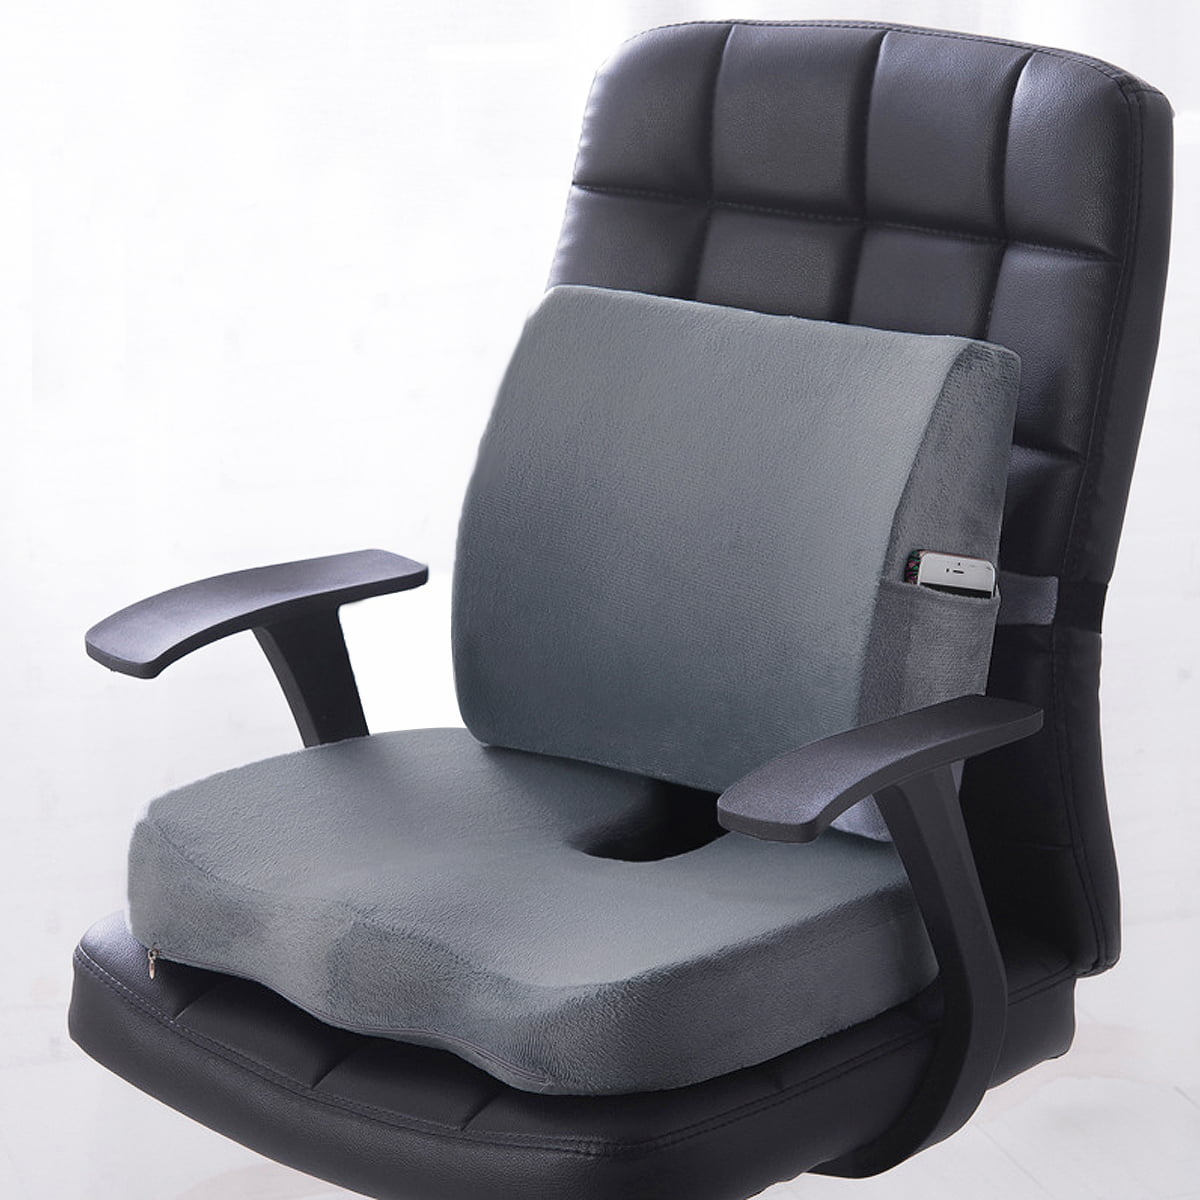 Premium Memory Foam Seat Cushion Lumbar Back Support Orthoped Home Car Office Chair Seat Pad Mat Pain Stress Relief Walmart Com Walmart Com